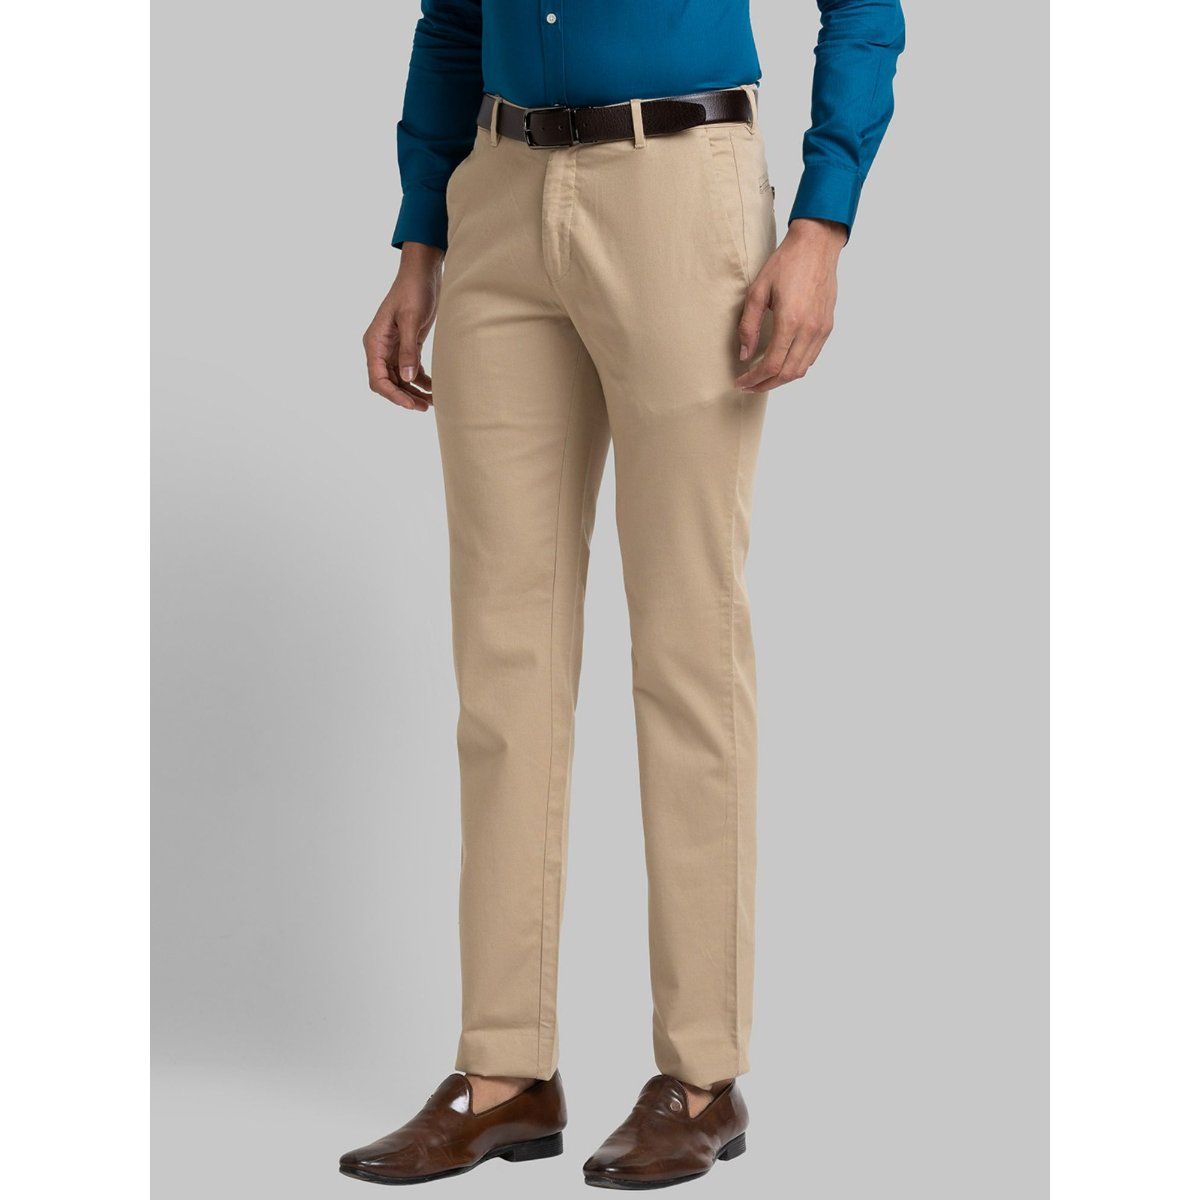 Buy Raymond Men Cream Coloured Slim Fit Solid Regular Trousers - Trousers  for Men 9537579 | Myntra